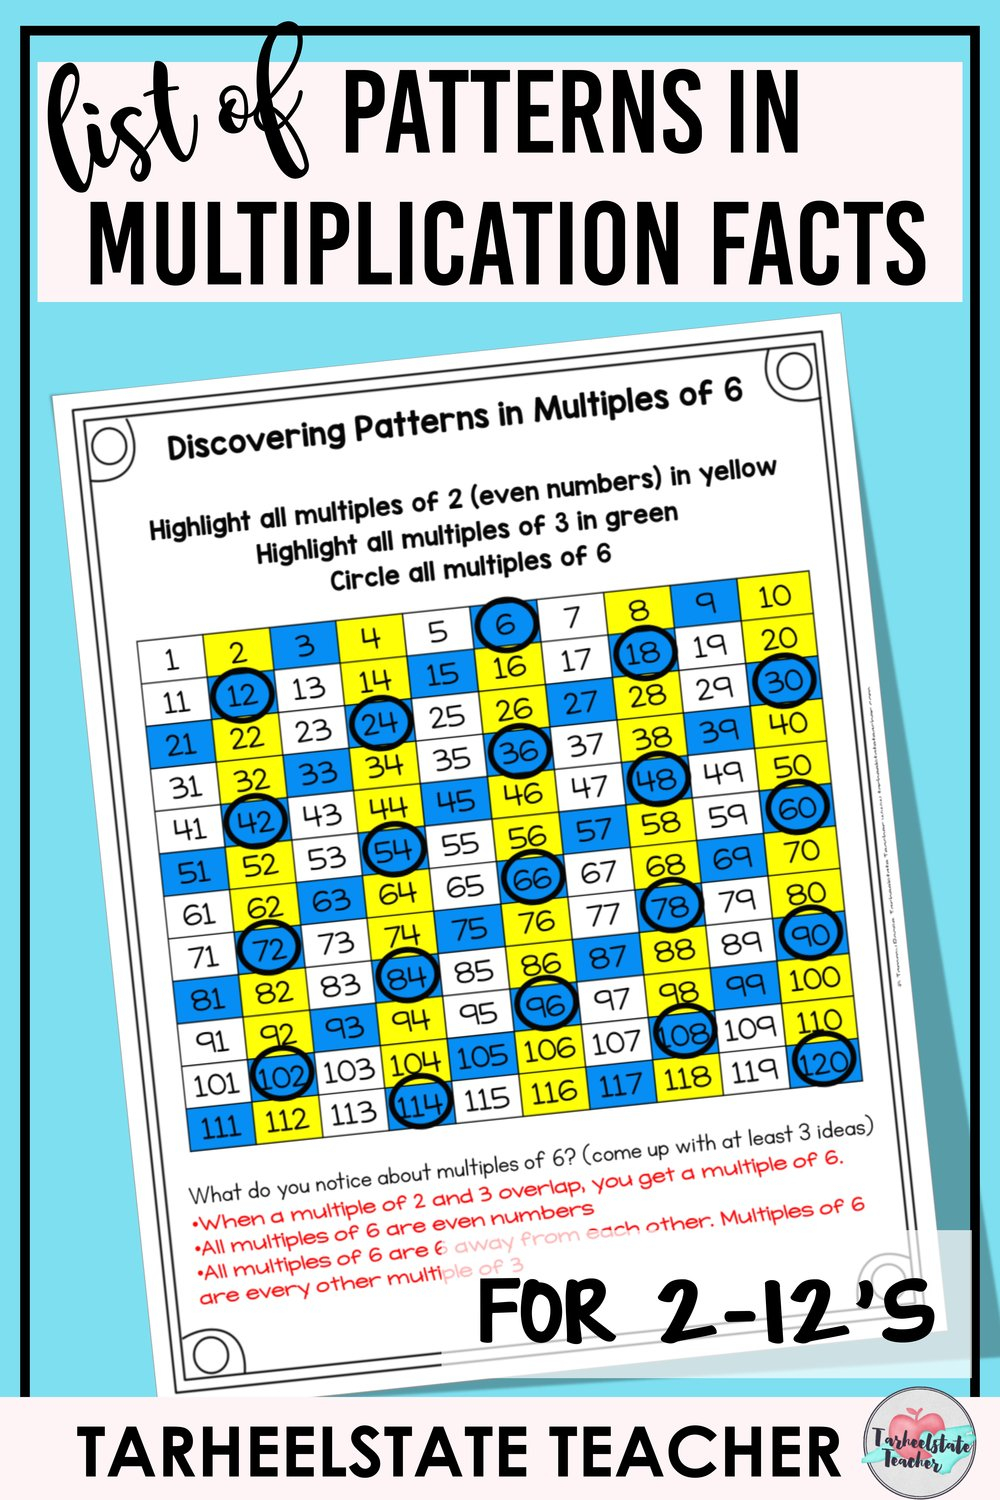 Multiplication Patterns In Times Tables — Tarheelstate Teacher